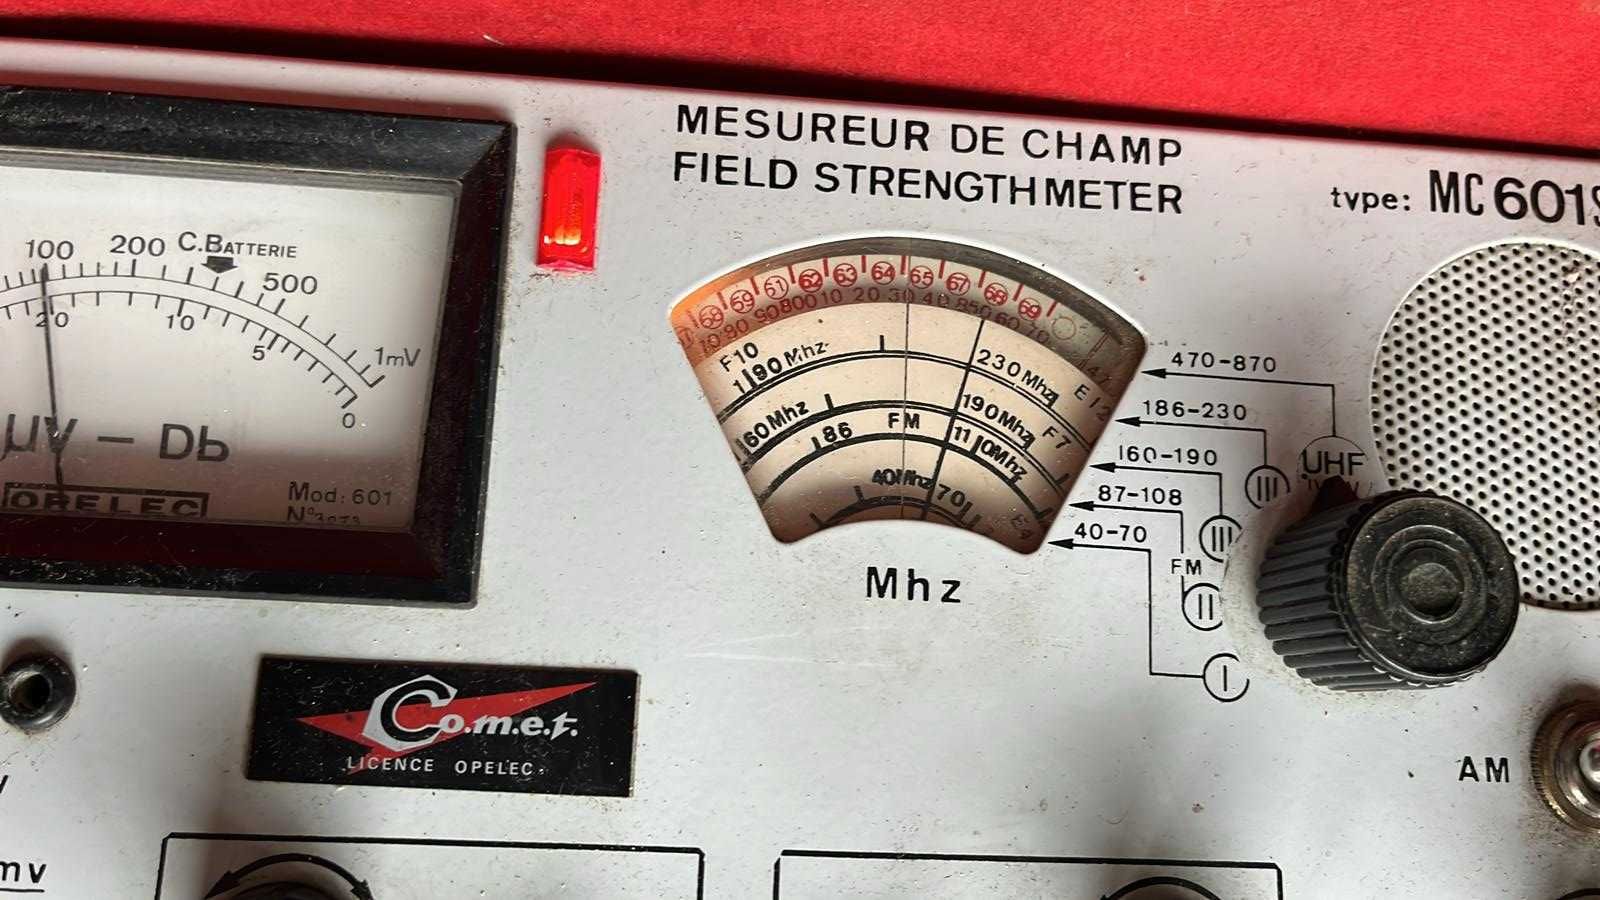 Field Strengthmeter type MC601ST - măsurare câmp